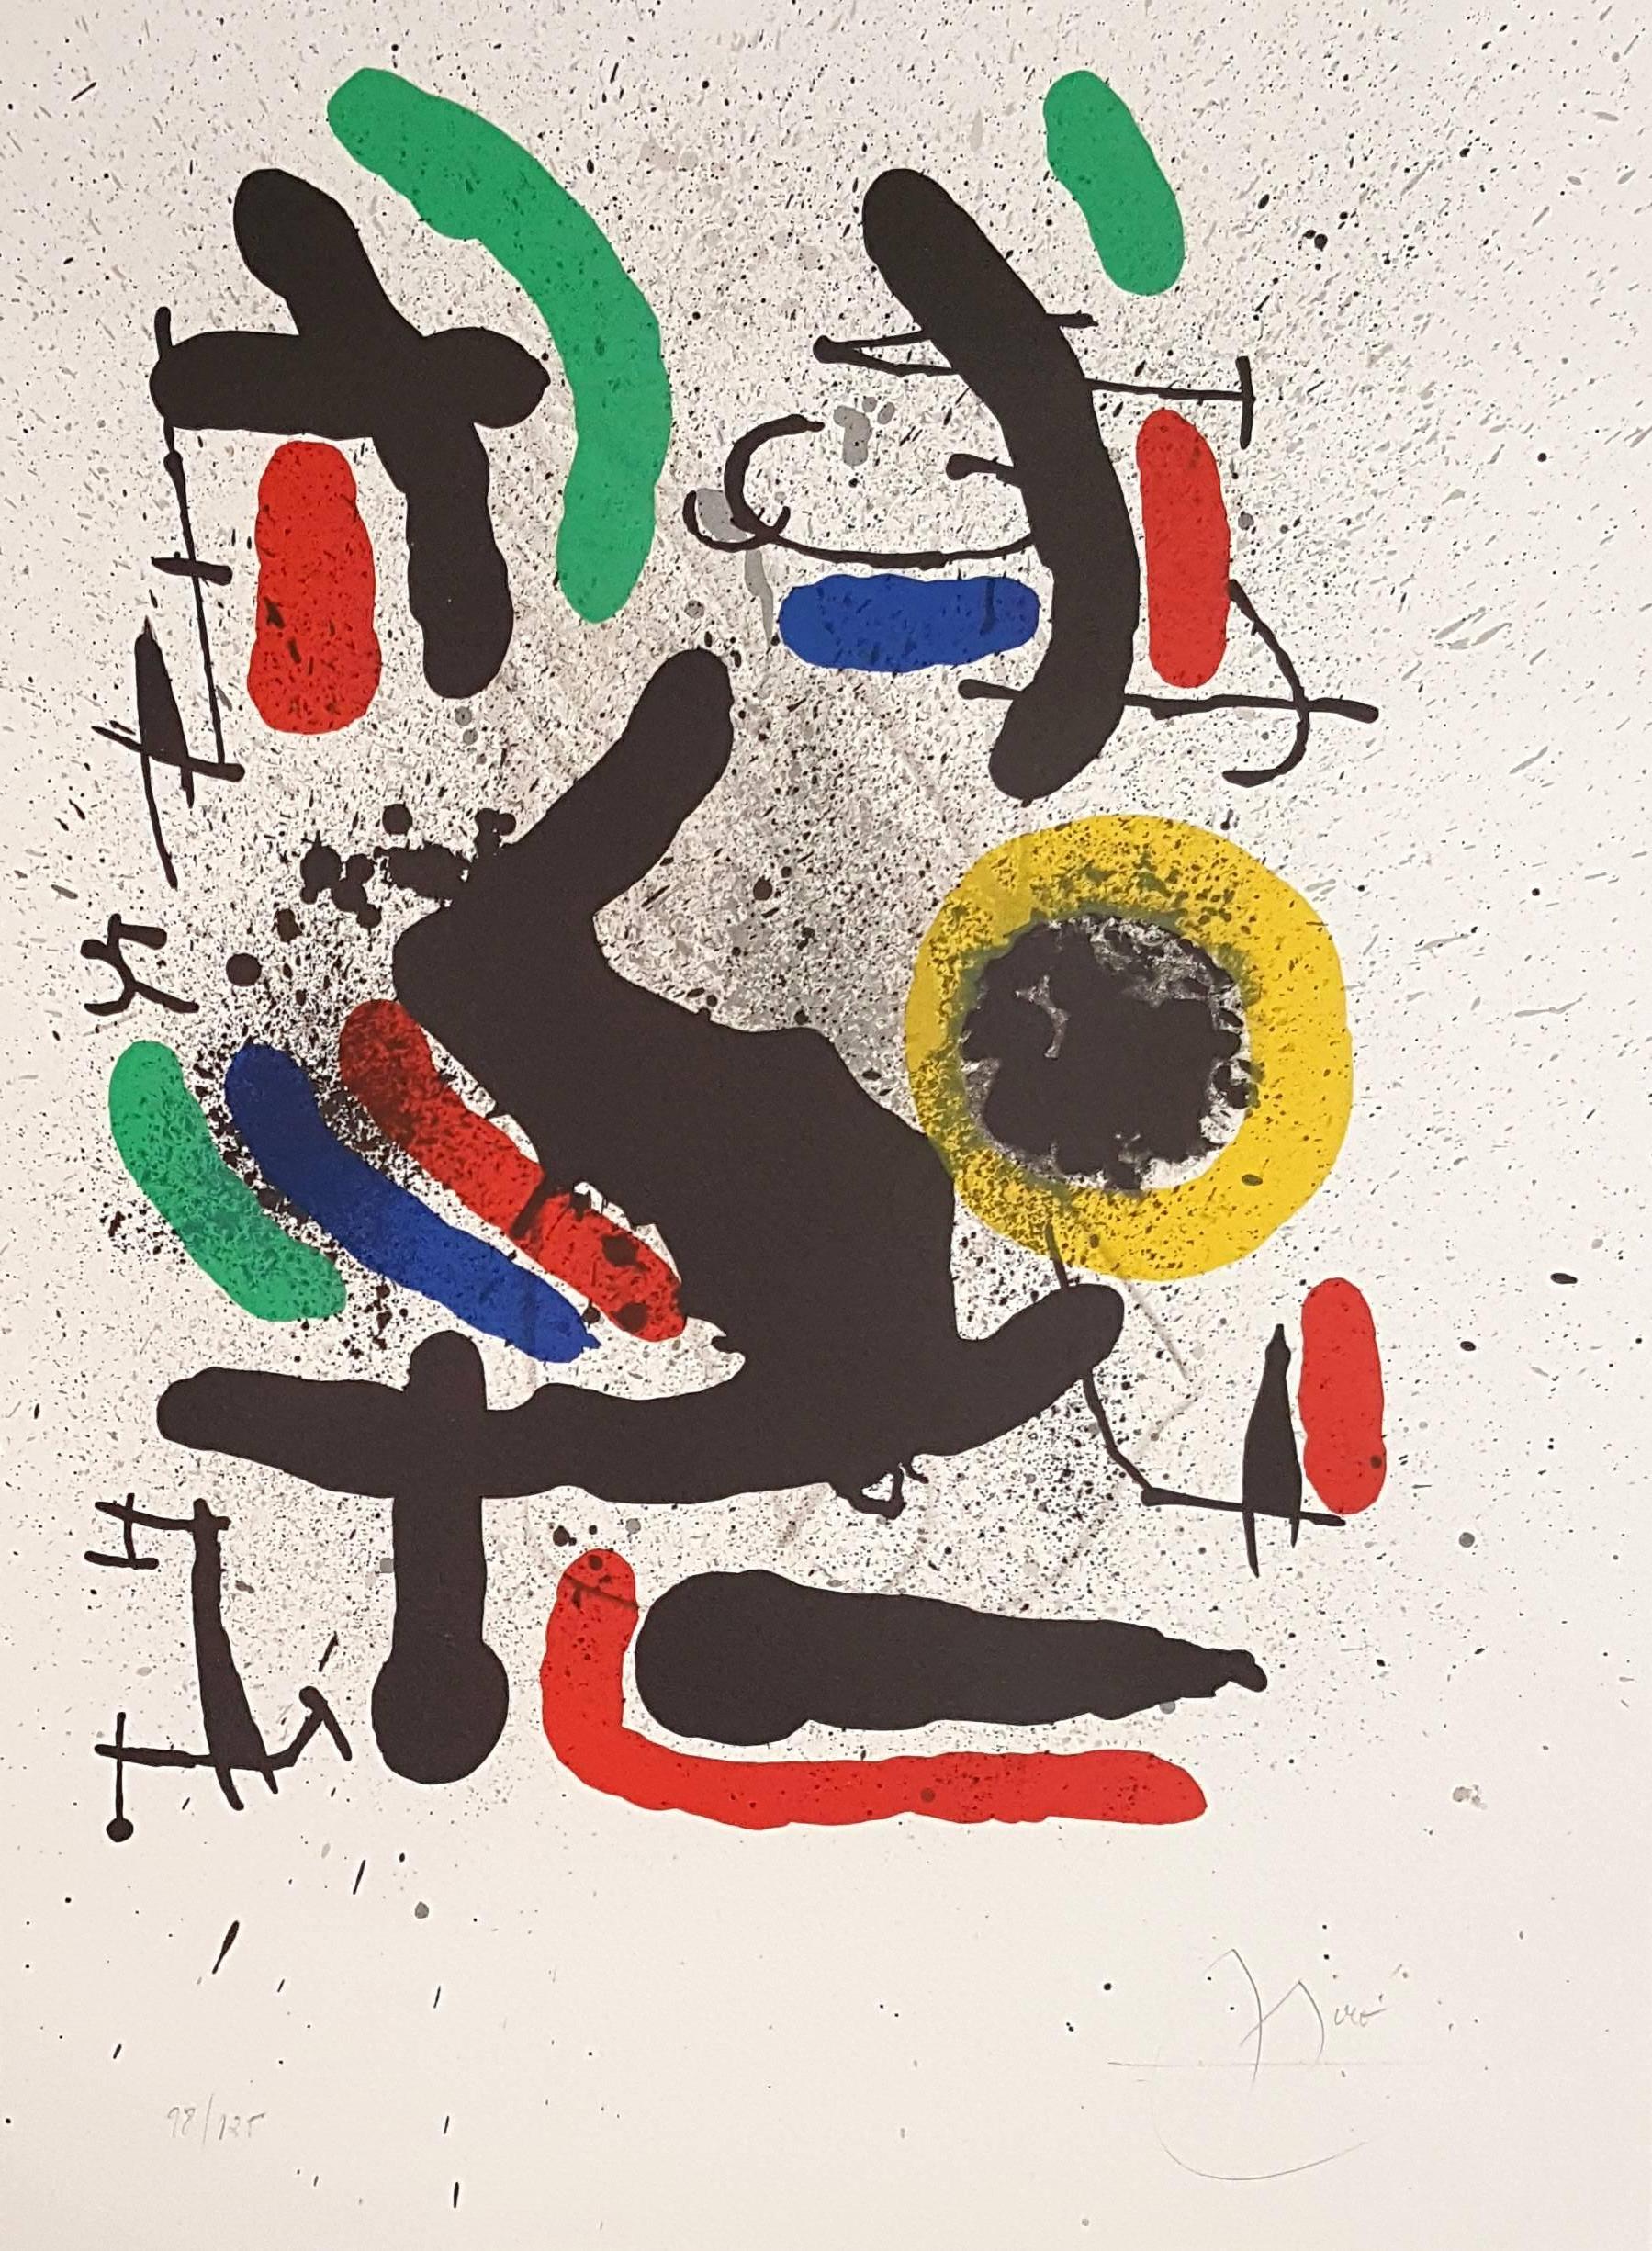 Joan Miró Abstract Print - Liberty of Liberties - Original Lithograph Handsigned and Numbered